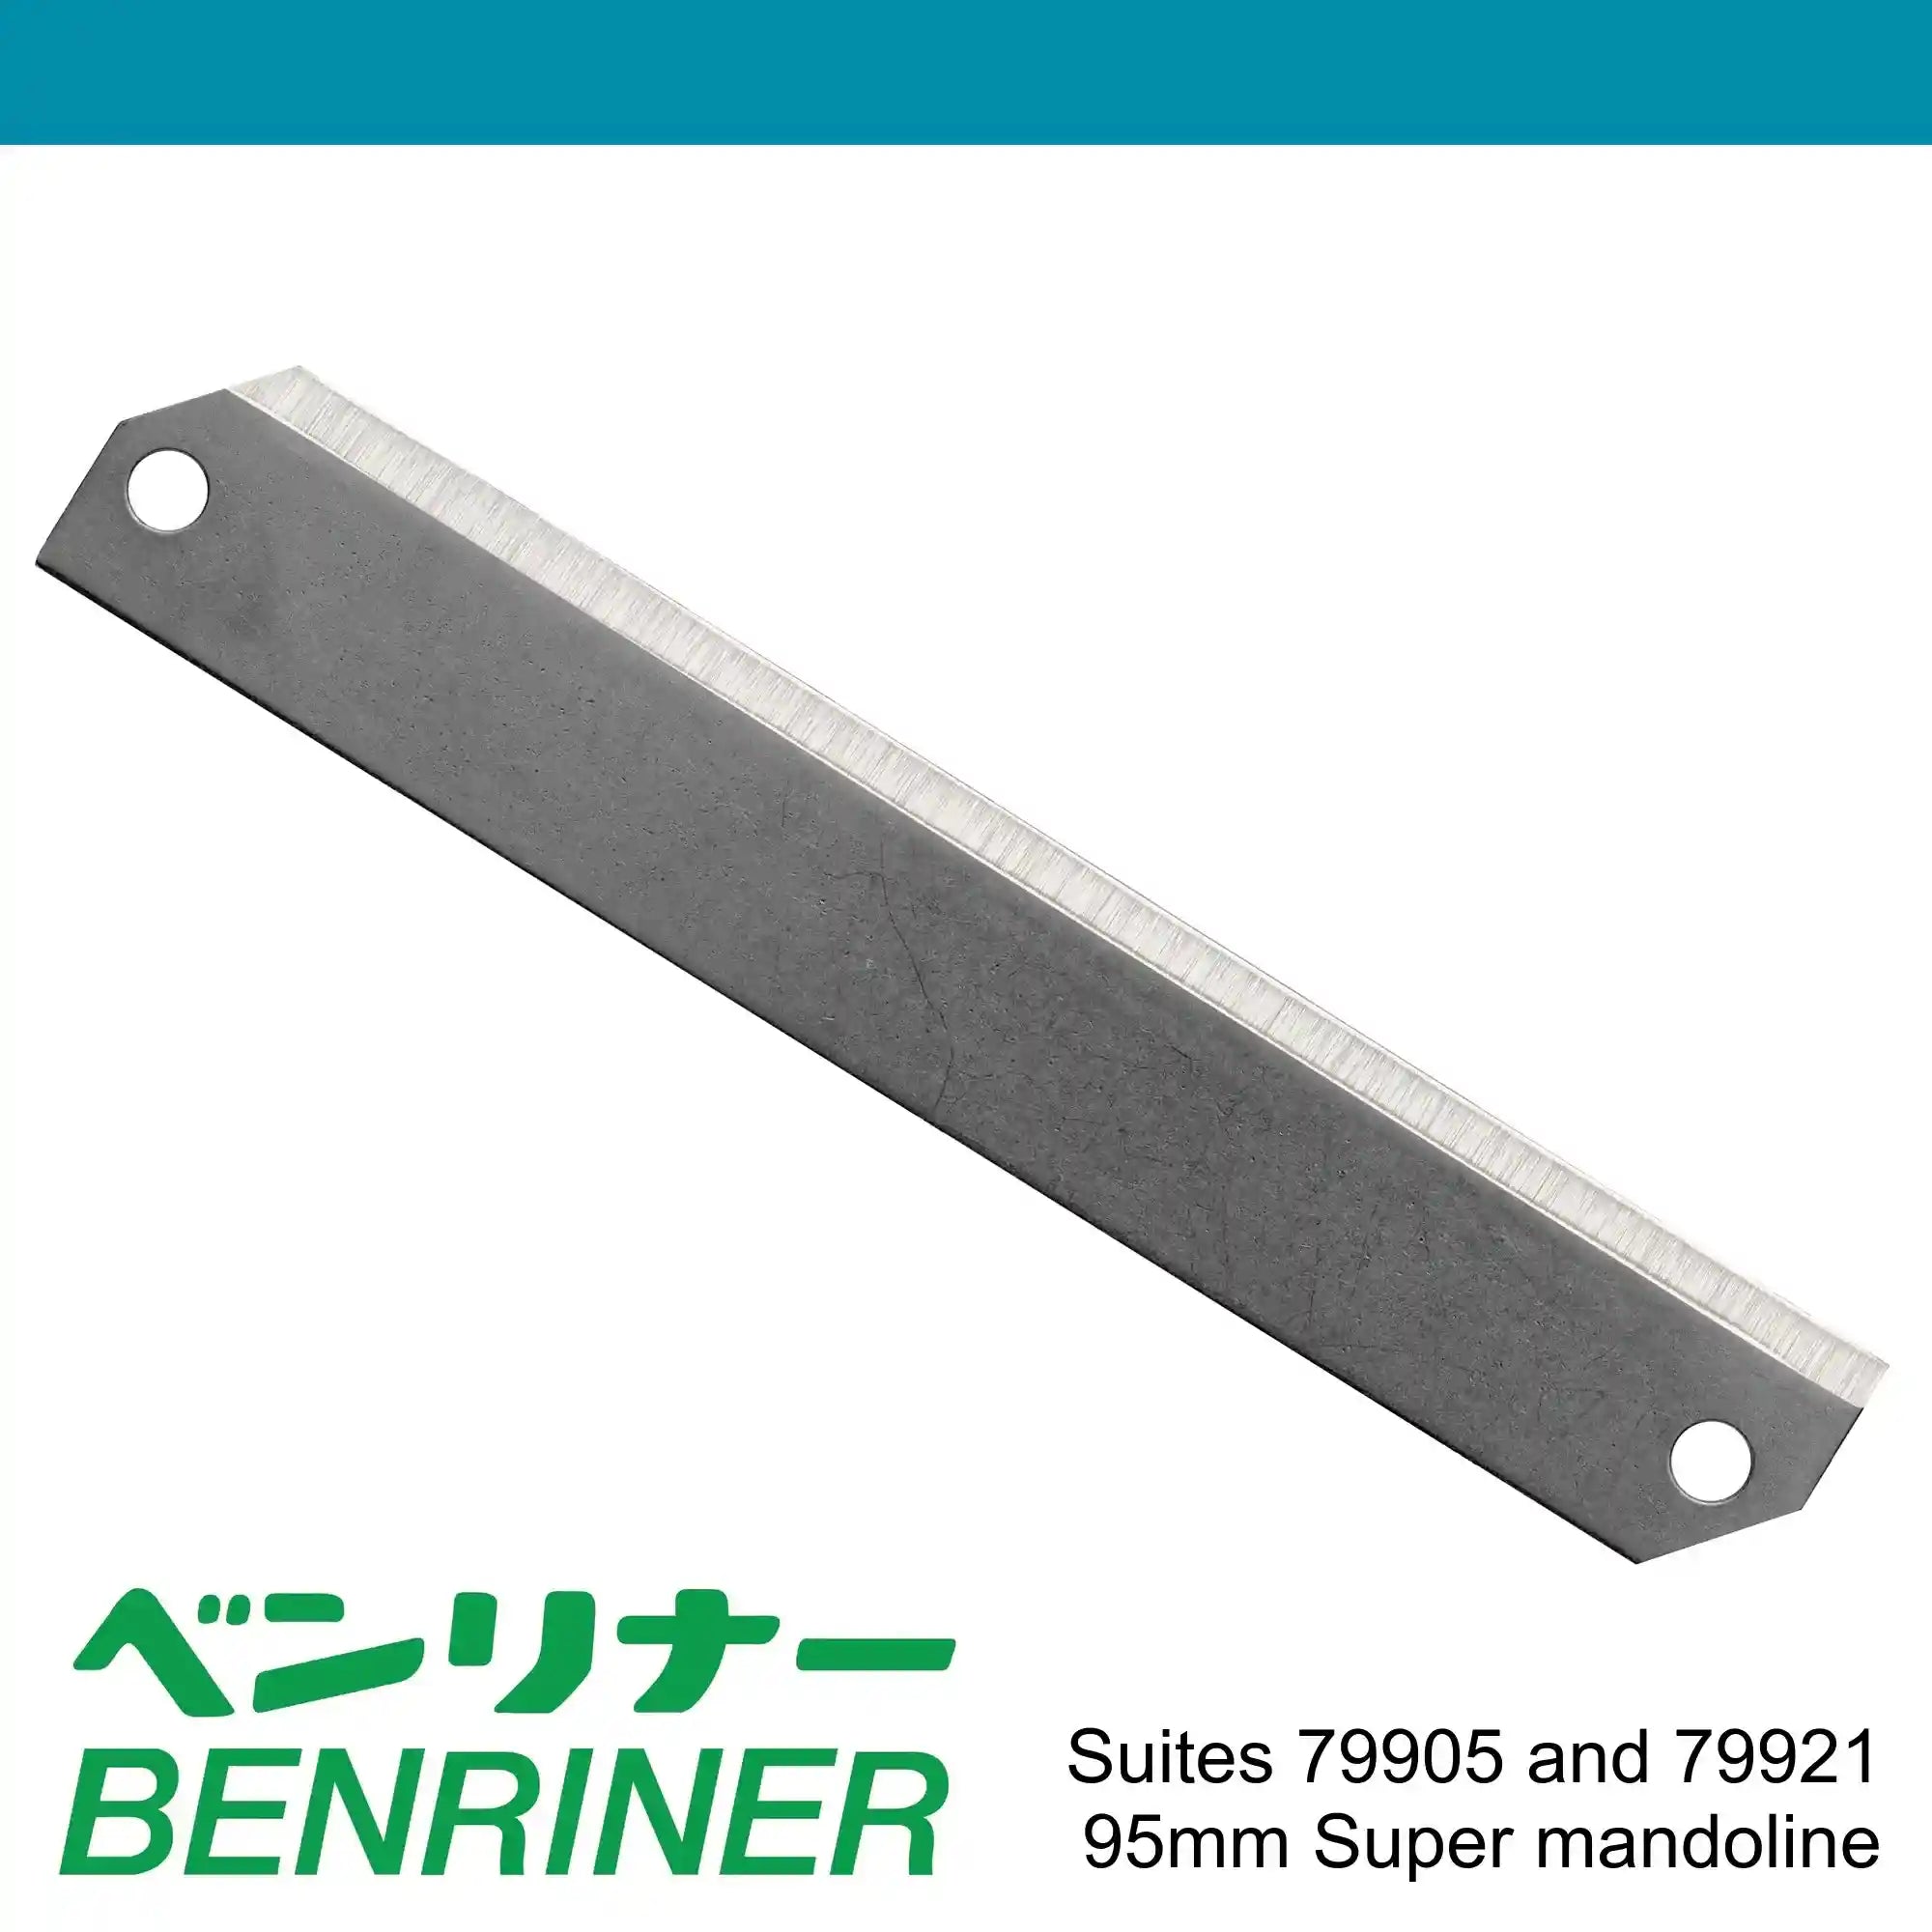 Benriner Mandoline Replacement plain blade (95 mm)